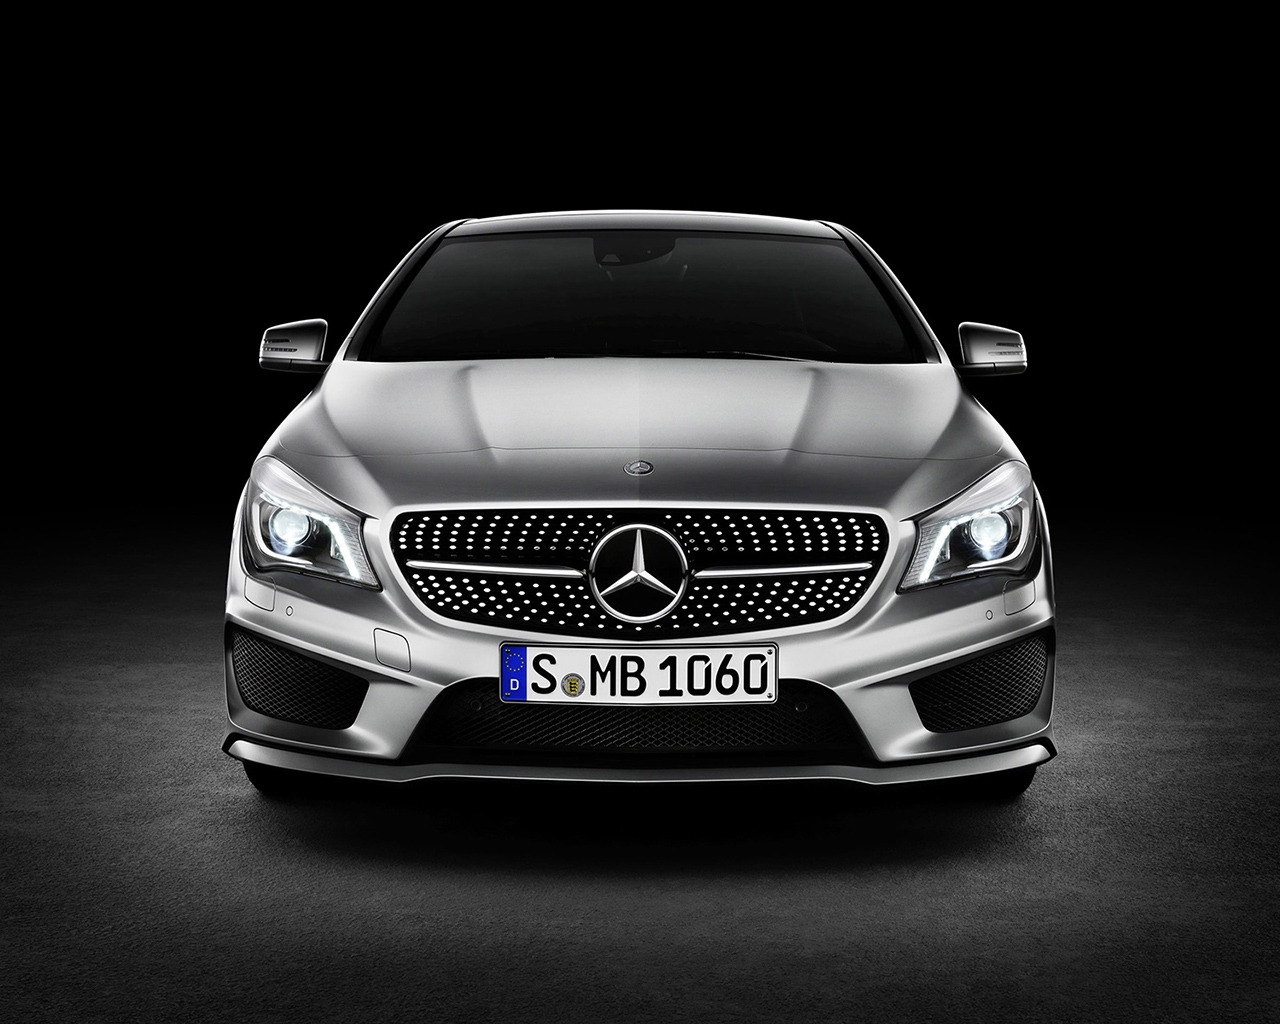 Mercedes Benz CLA Class Studio for 1280 x 1024 resolution